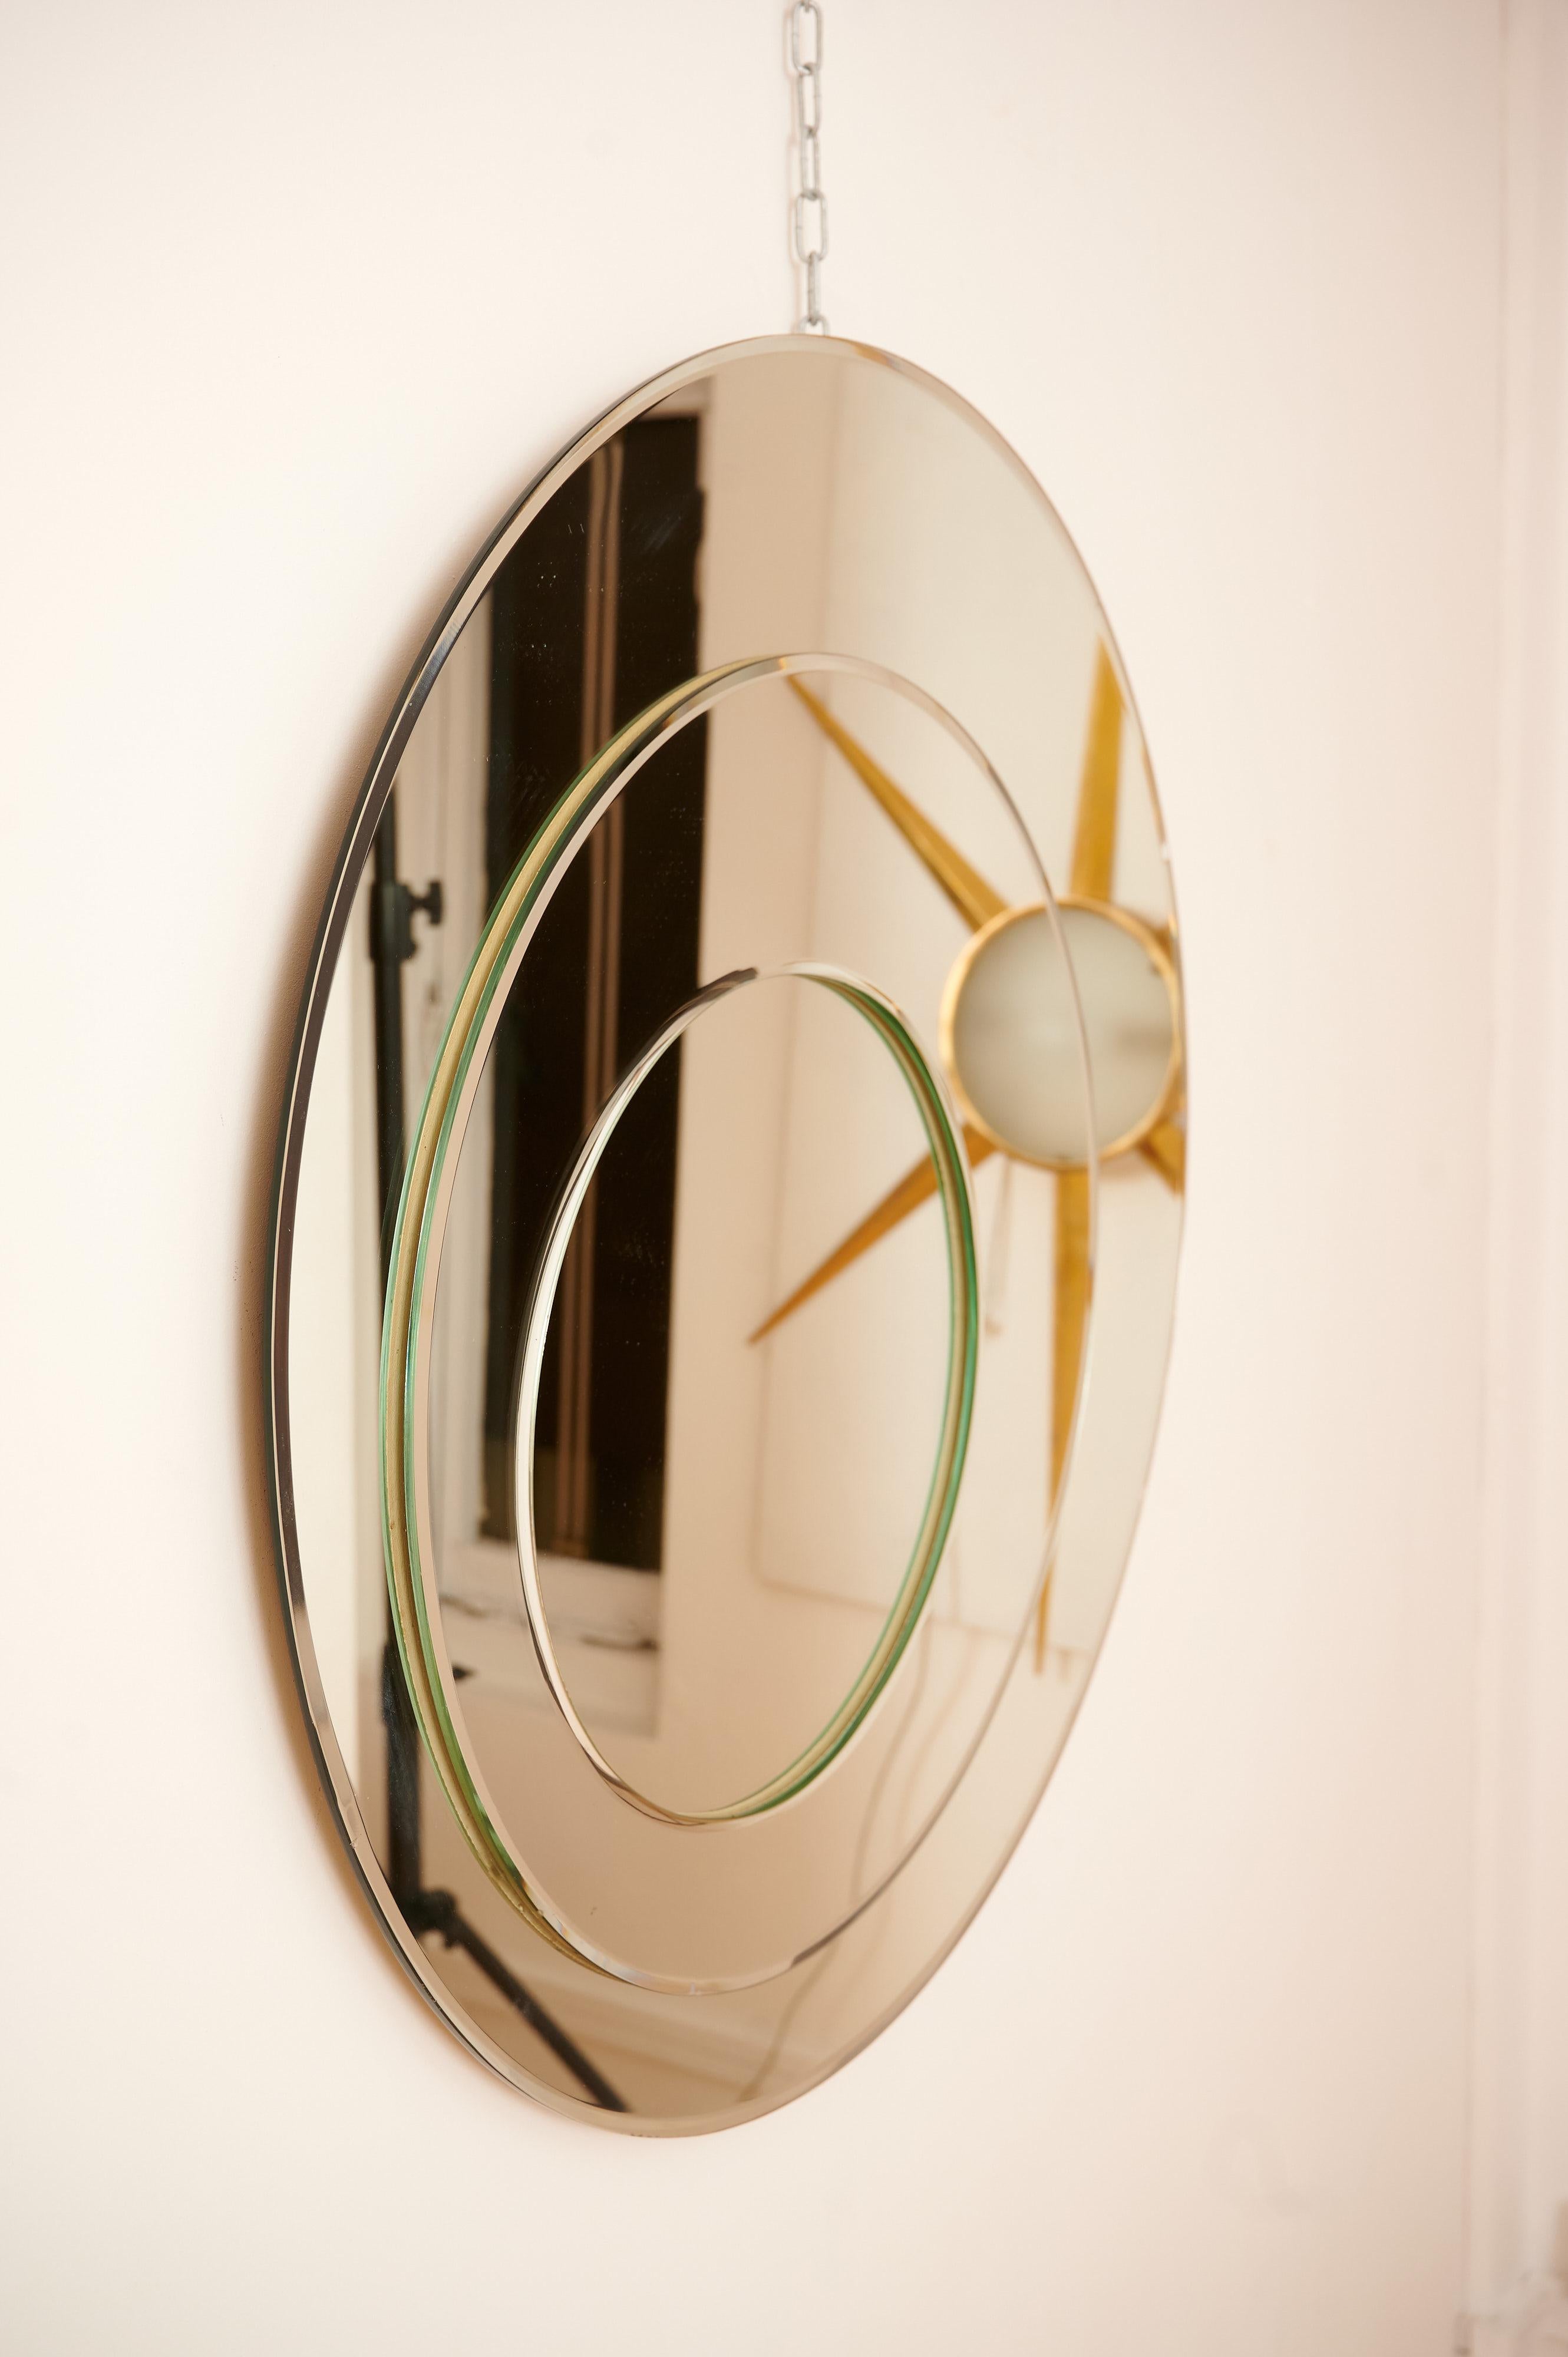 Decorative circular mirror from 1970s Italy.

